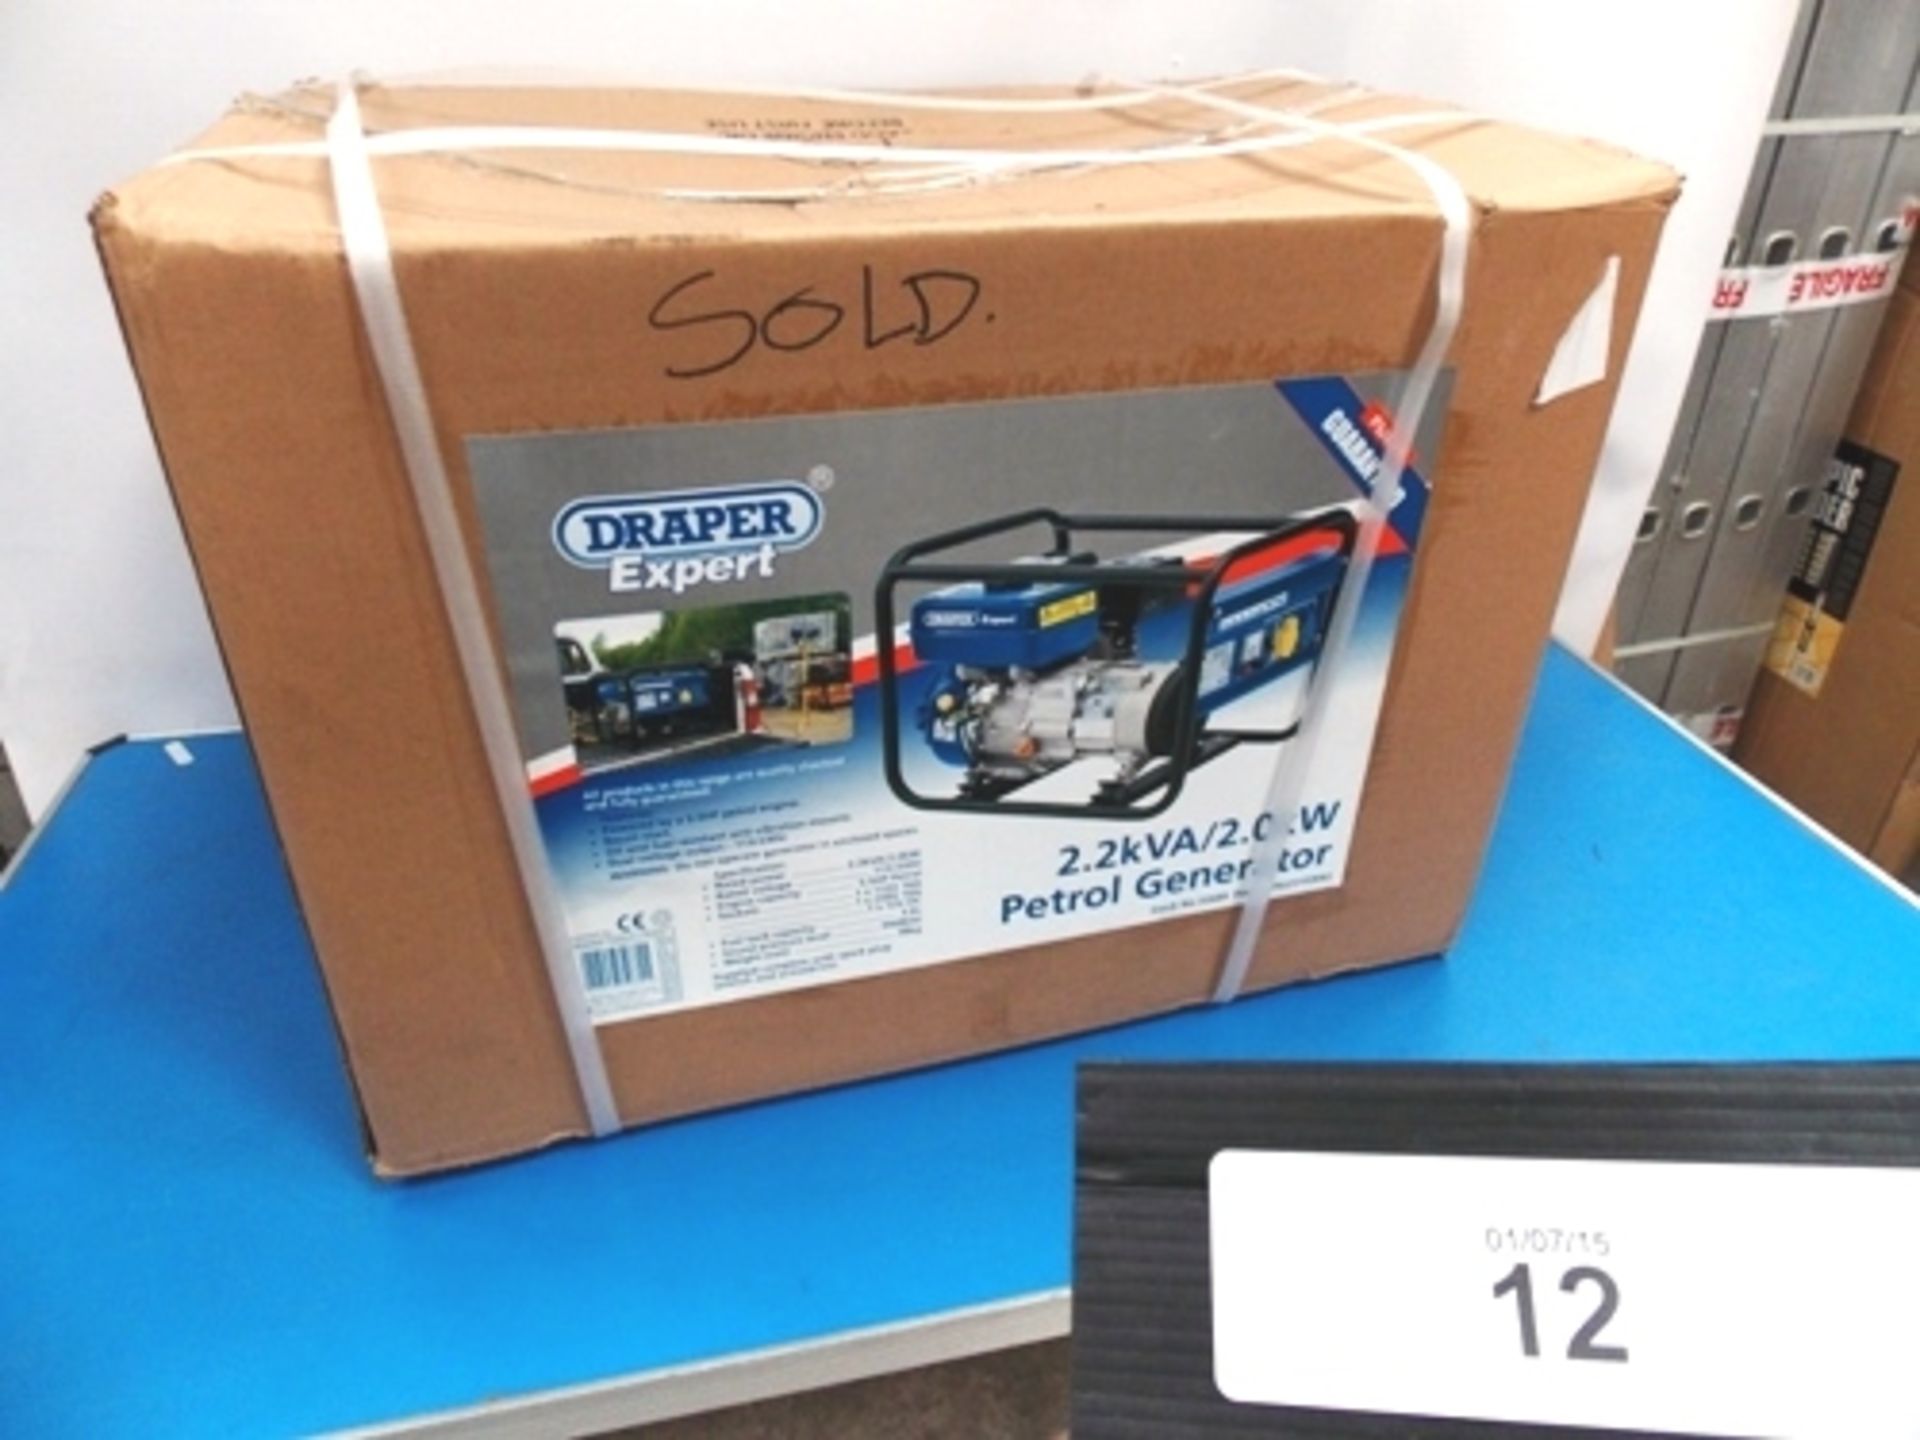 Draper Expert 2.2k Va/2.0kw petrol generator, item no. 32689/PG251F(MK) - New in box